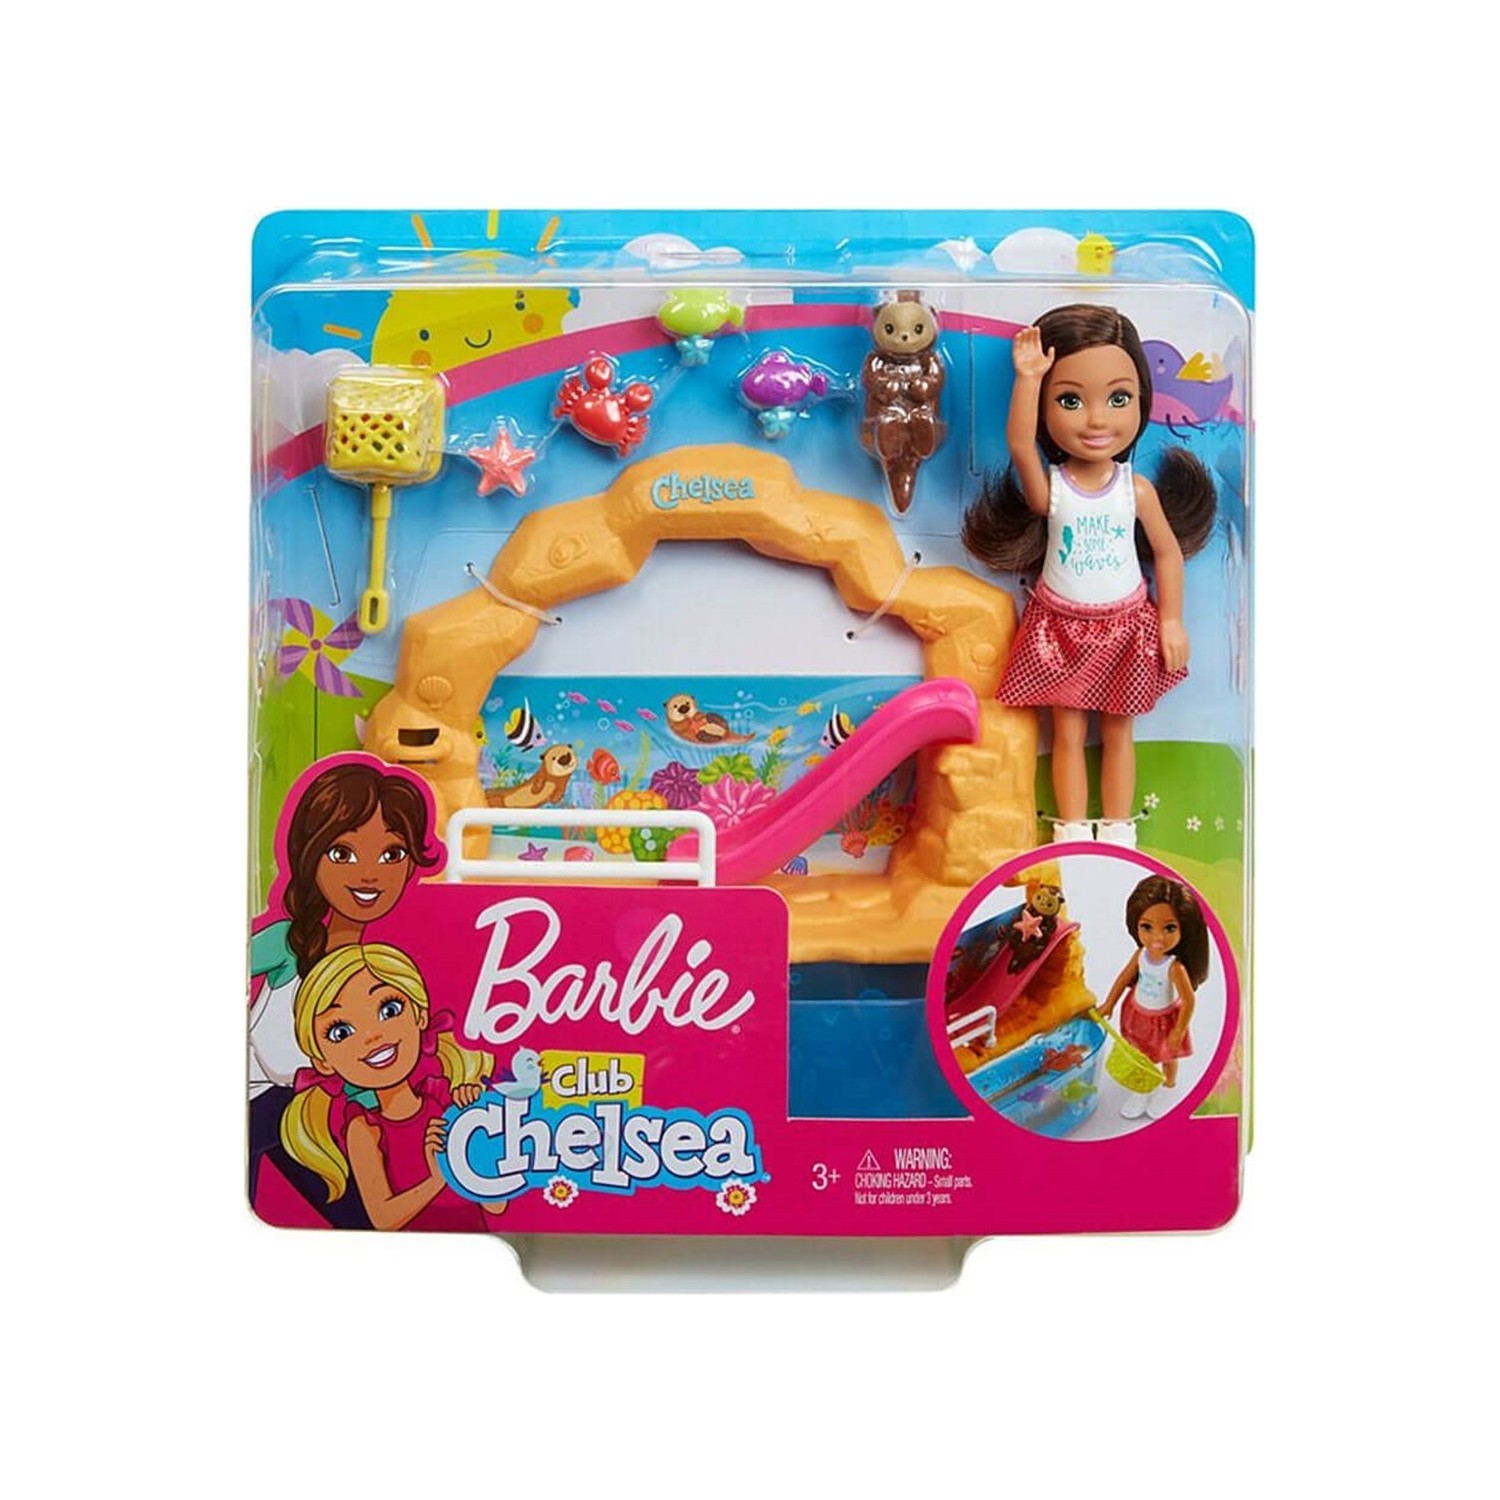 Набор Barbie для пикника Челси игровой набор для пикника barbie chelsea fdb32 ghv75